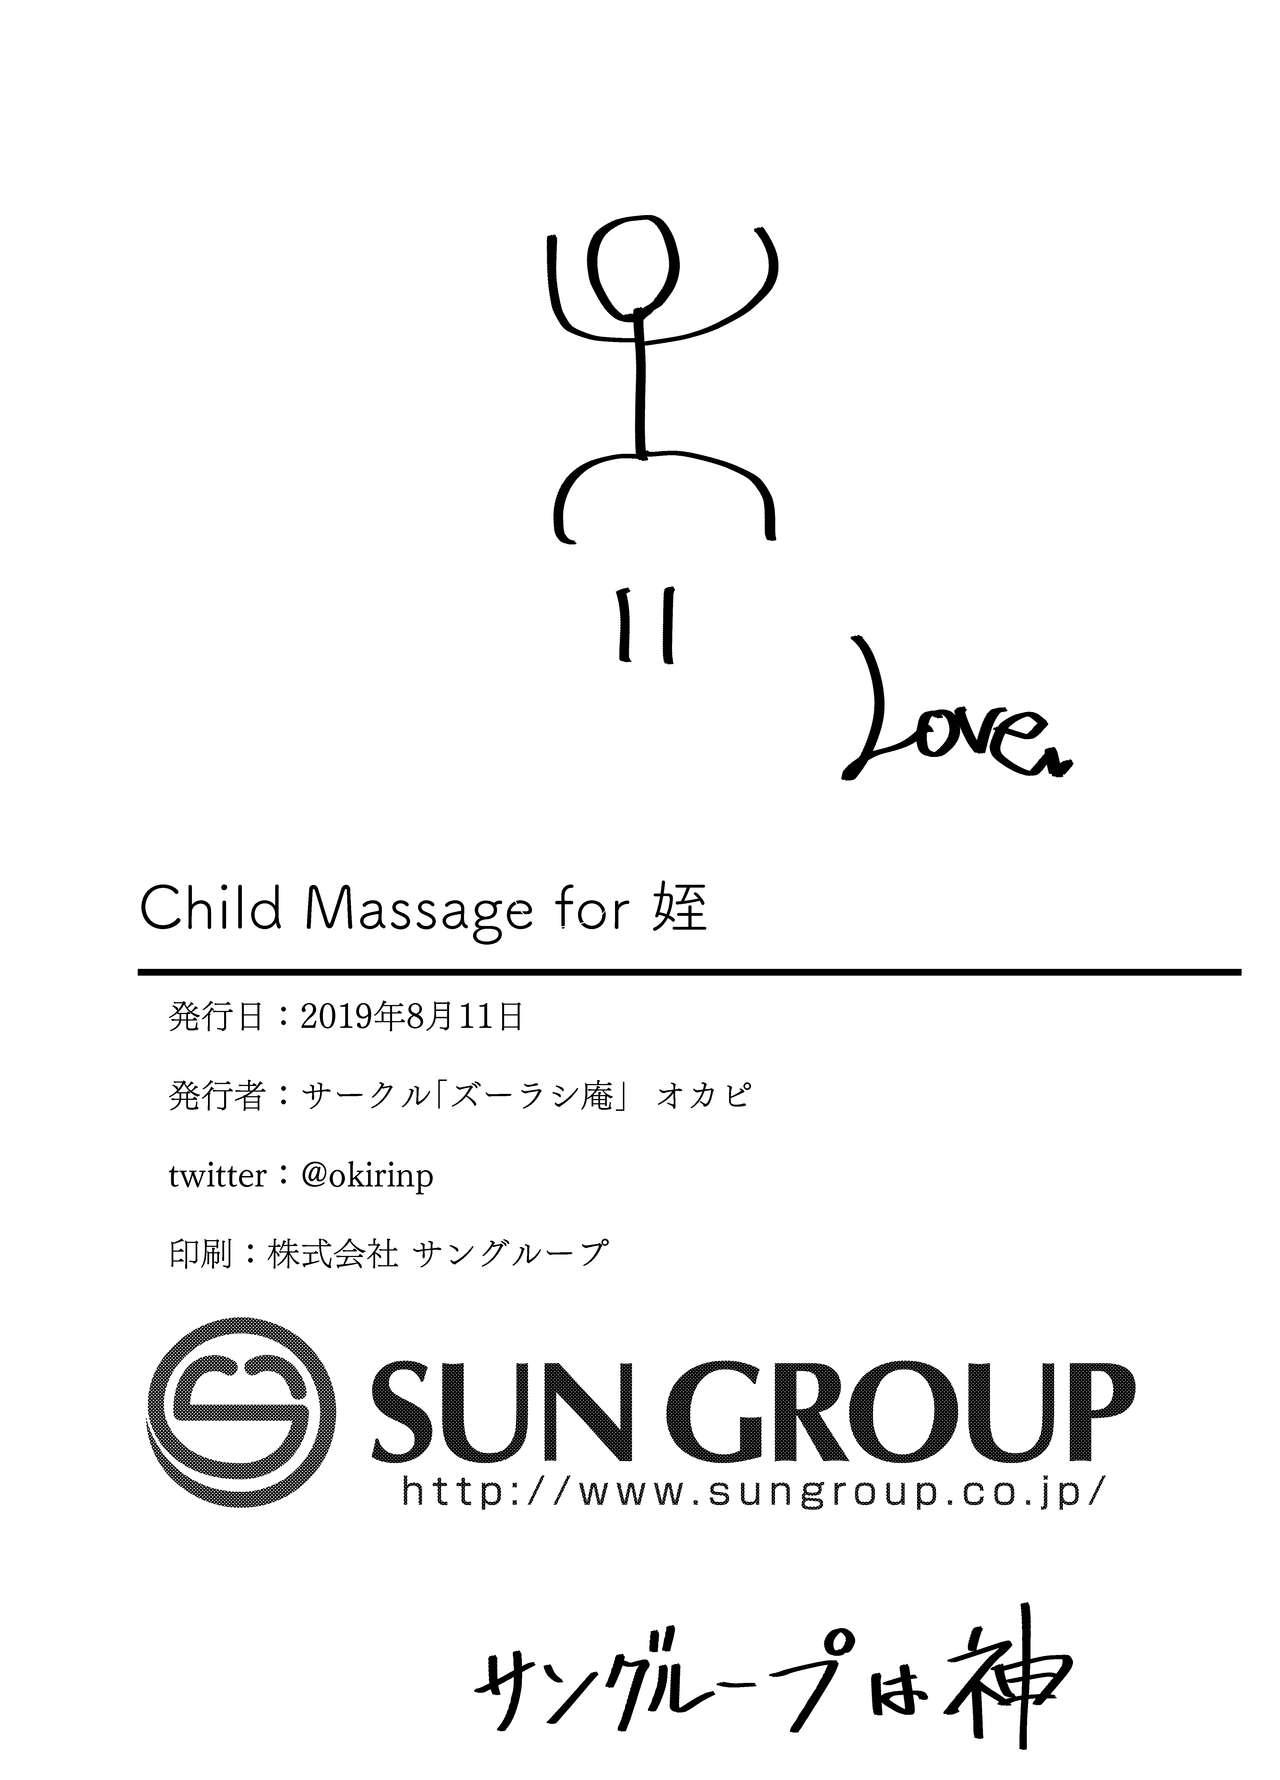 Child Massage for Mei 17